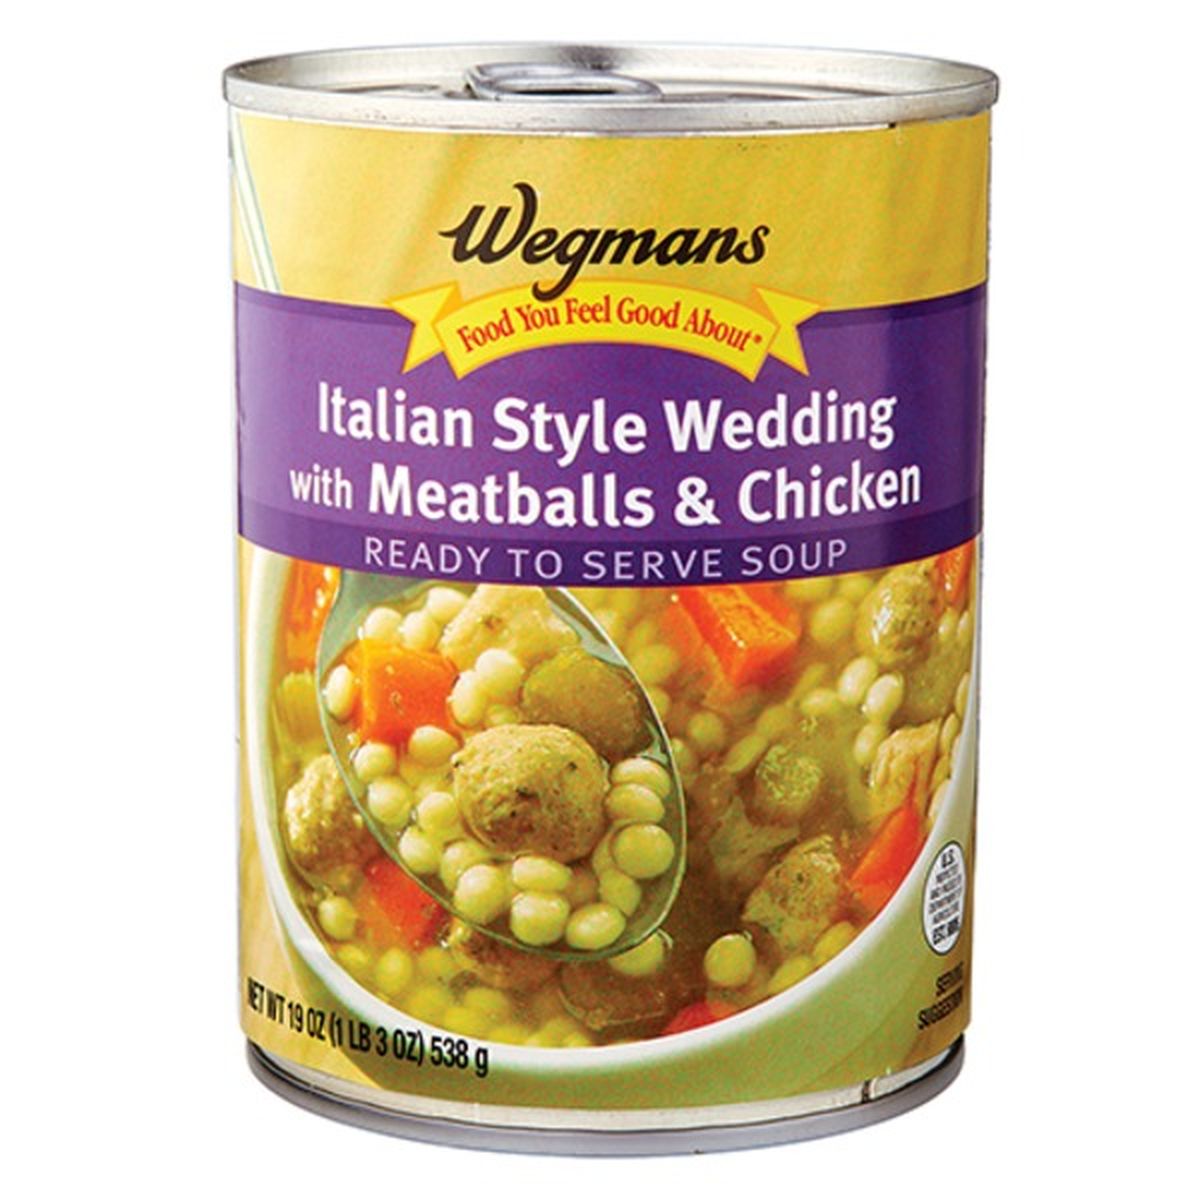 Calories in Wegmans Italian Style Wedding With Meatballs & Chicken